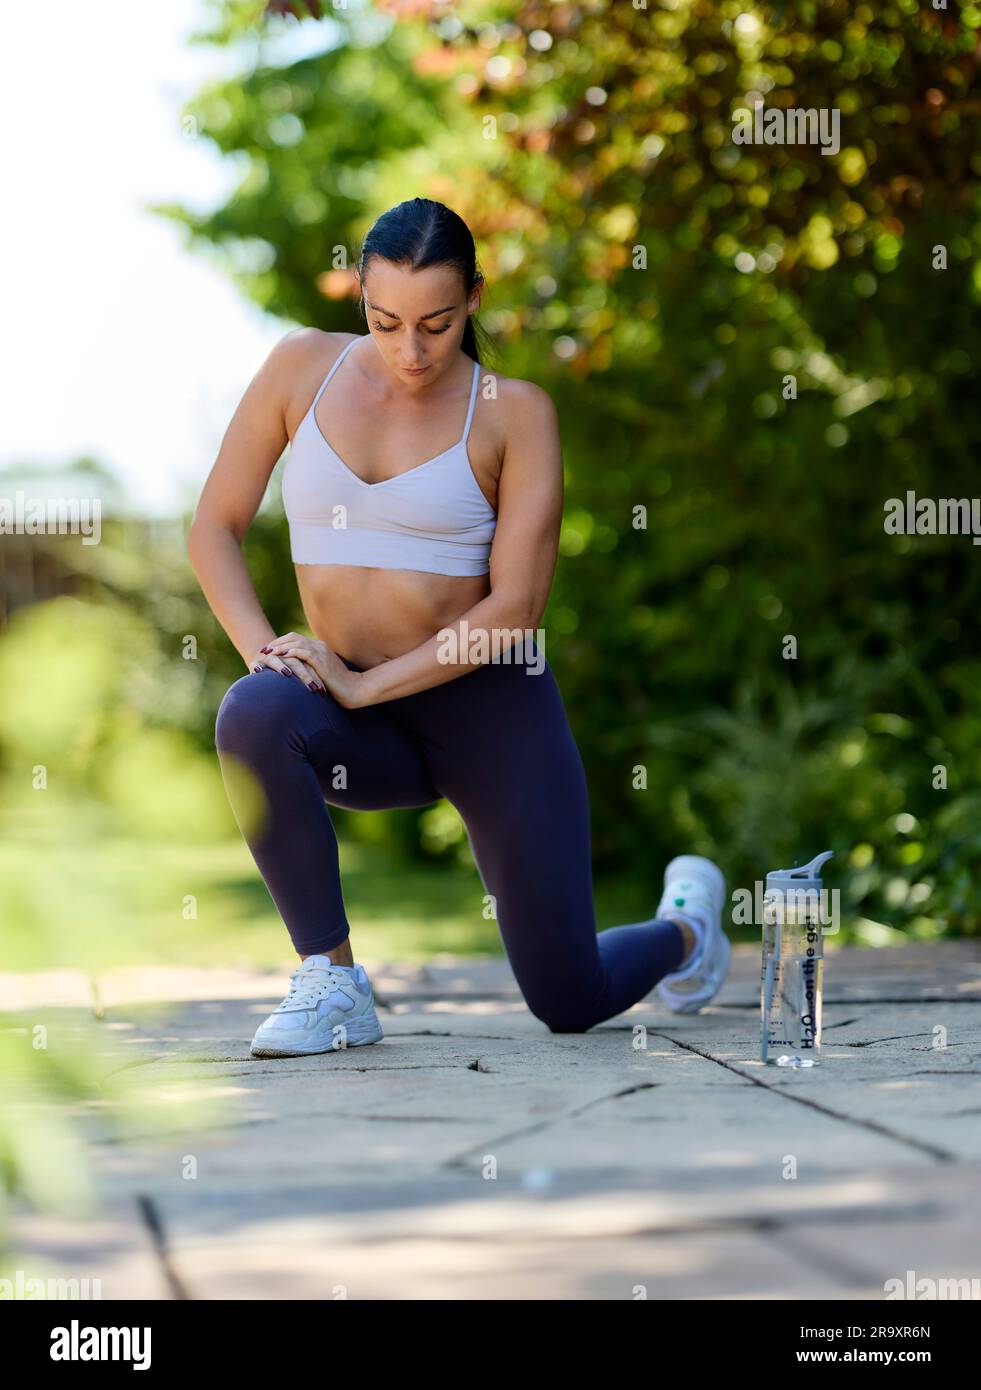 Woman exercising outdoors Stock Photo